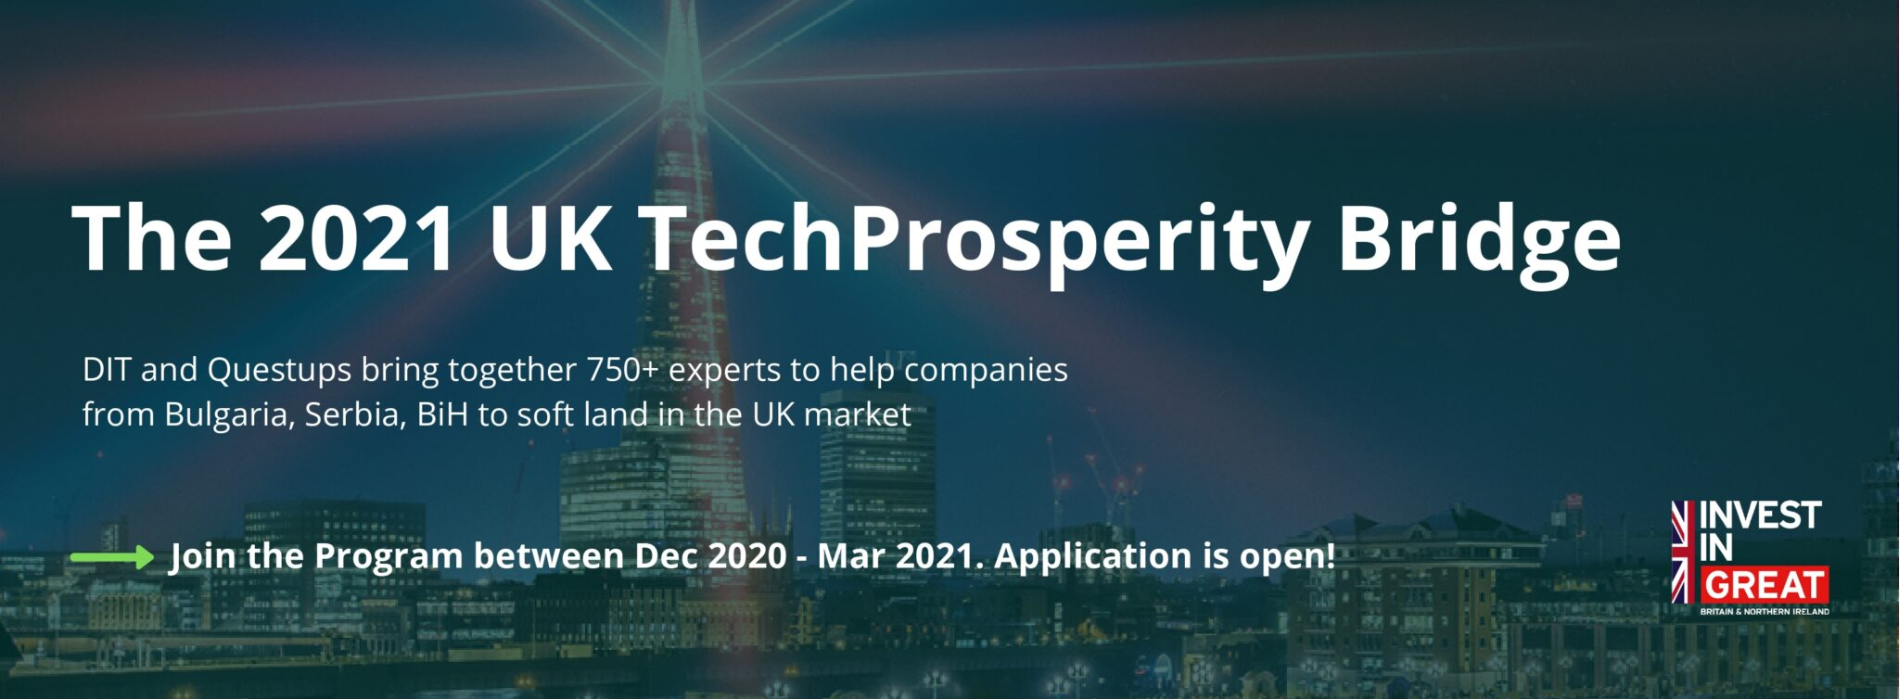 The 2021 UK TechProsperity Bridge Competition